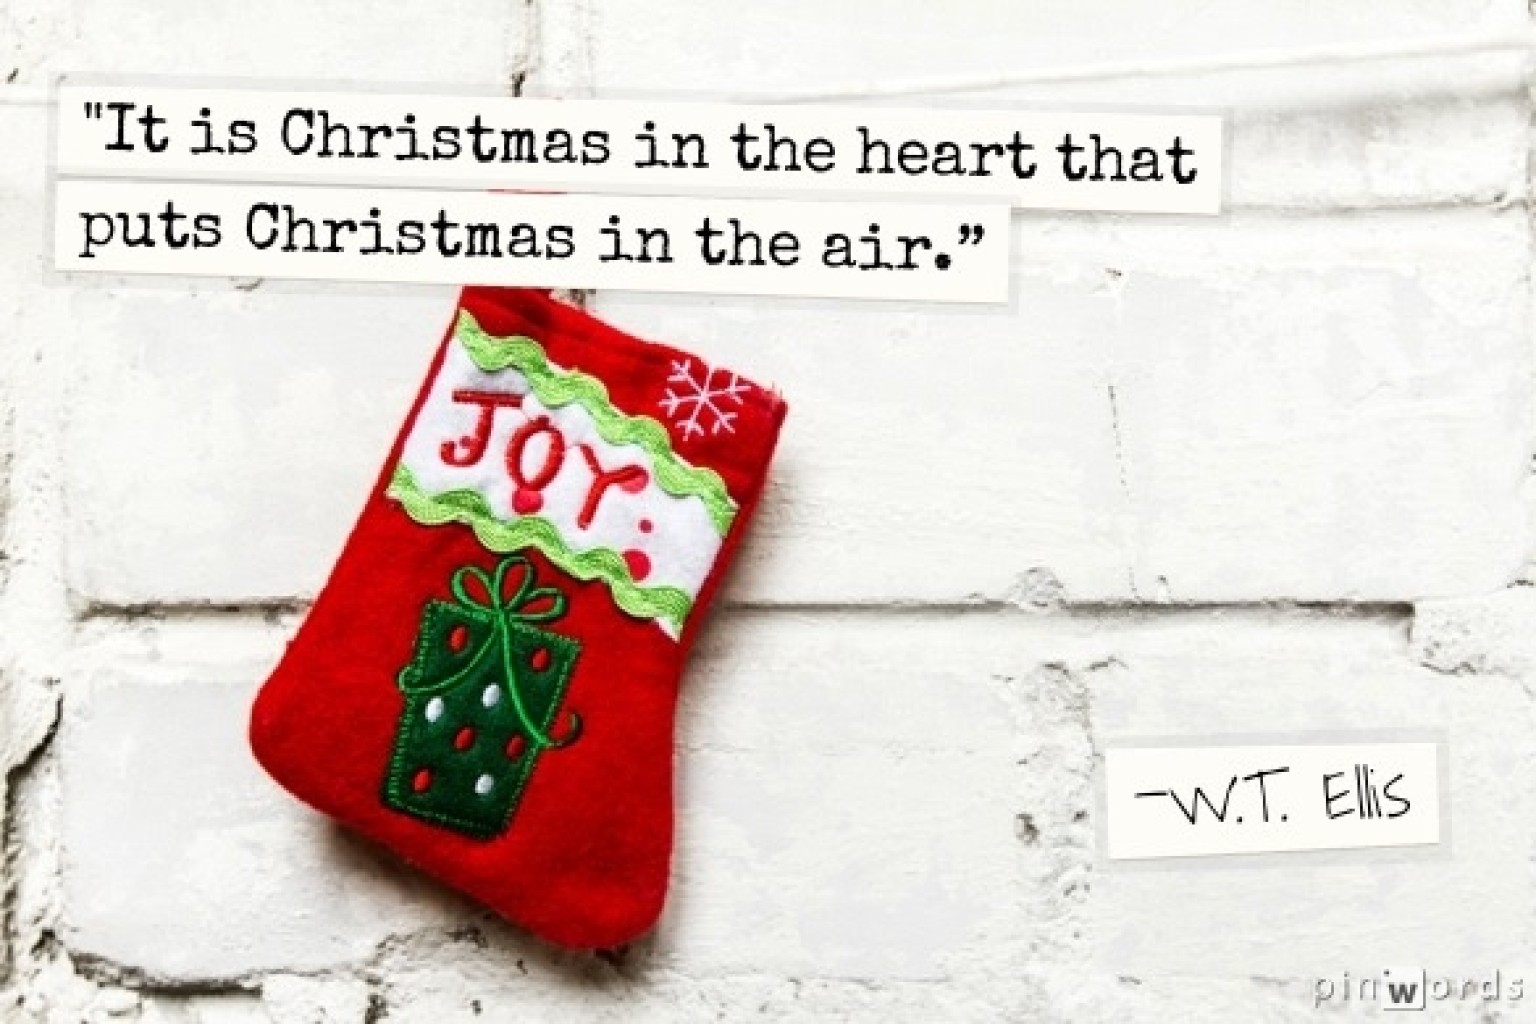 Christmas Quotes: 12 Spirited Sayings To Celebrate The Season | HuffPost